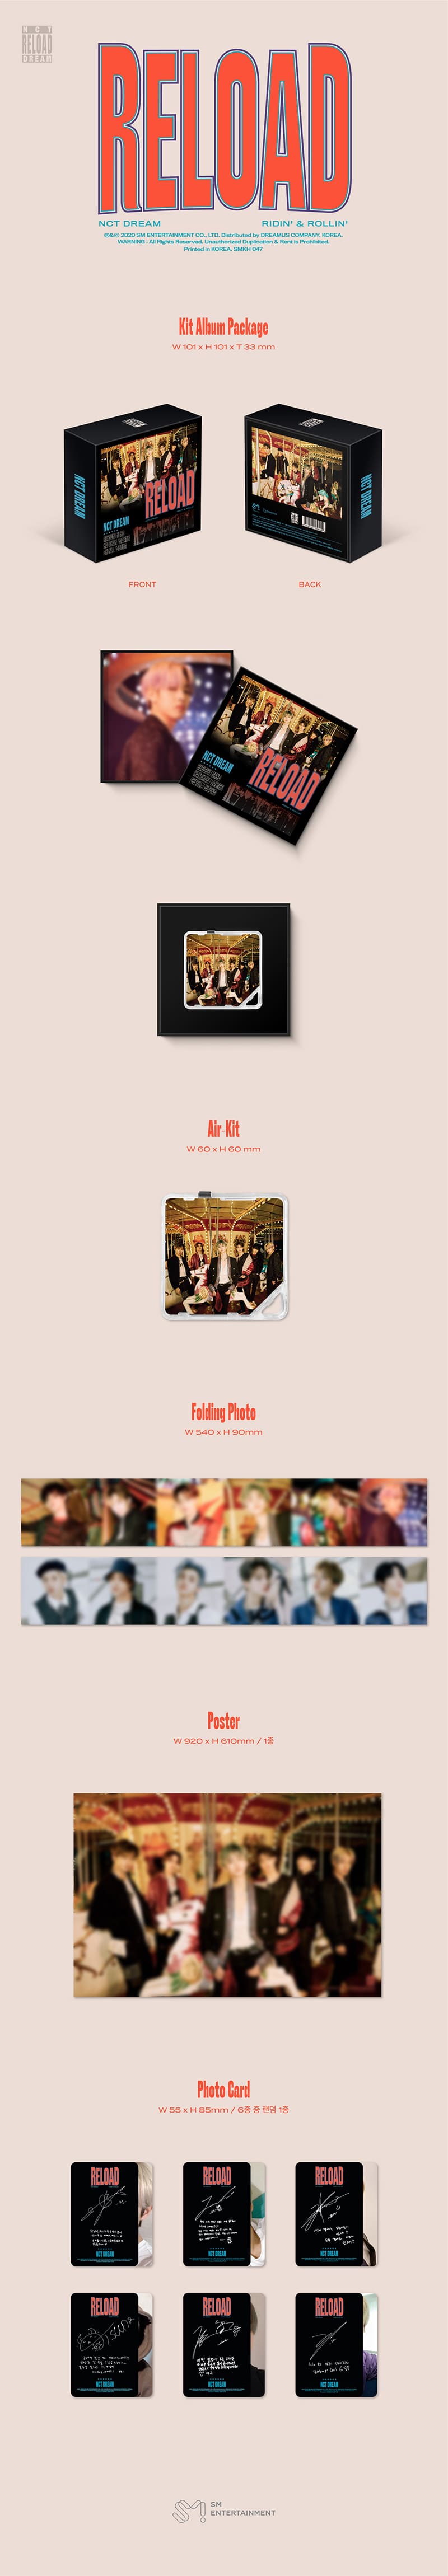 NCT DREAM 4th Mini Album Reload (KiT Version)